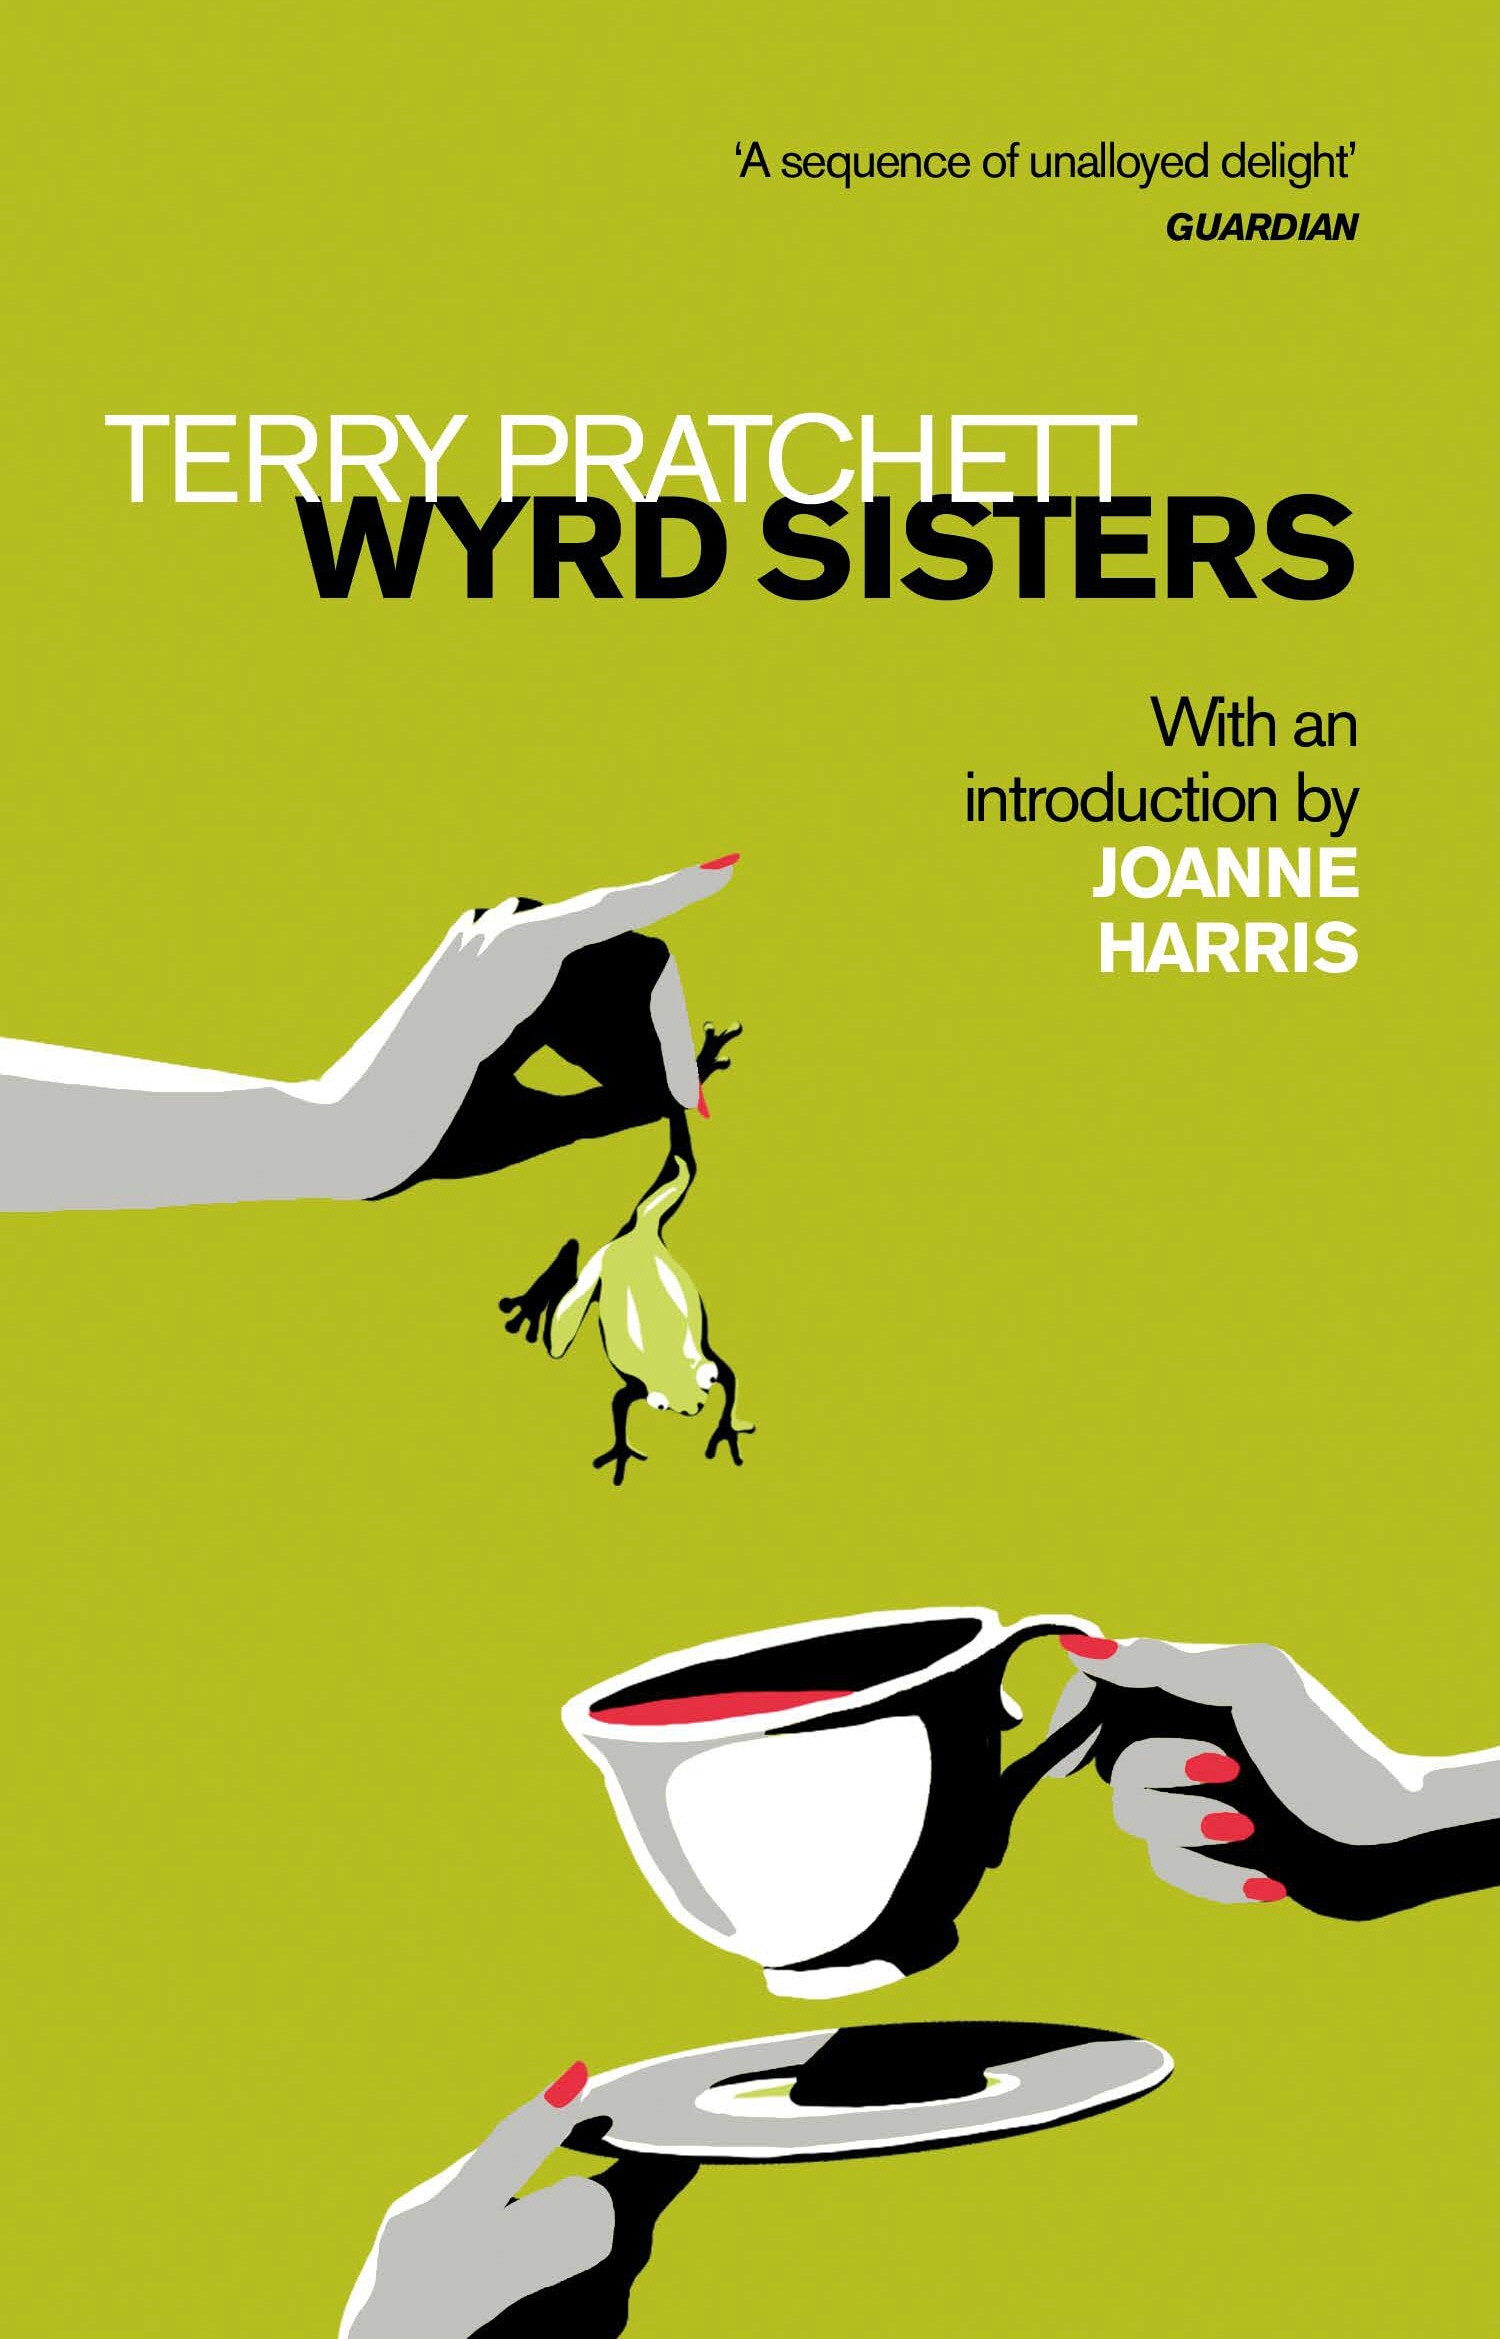 Book “Wyrd Sisters” by Terry Pratchett, Joanne Harris — April 25, 2019